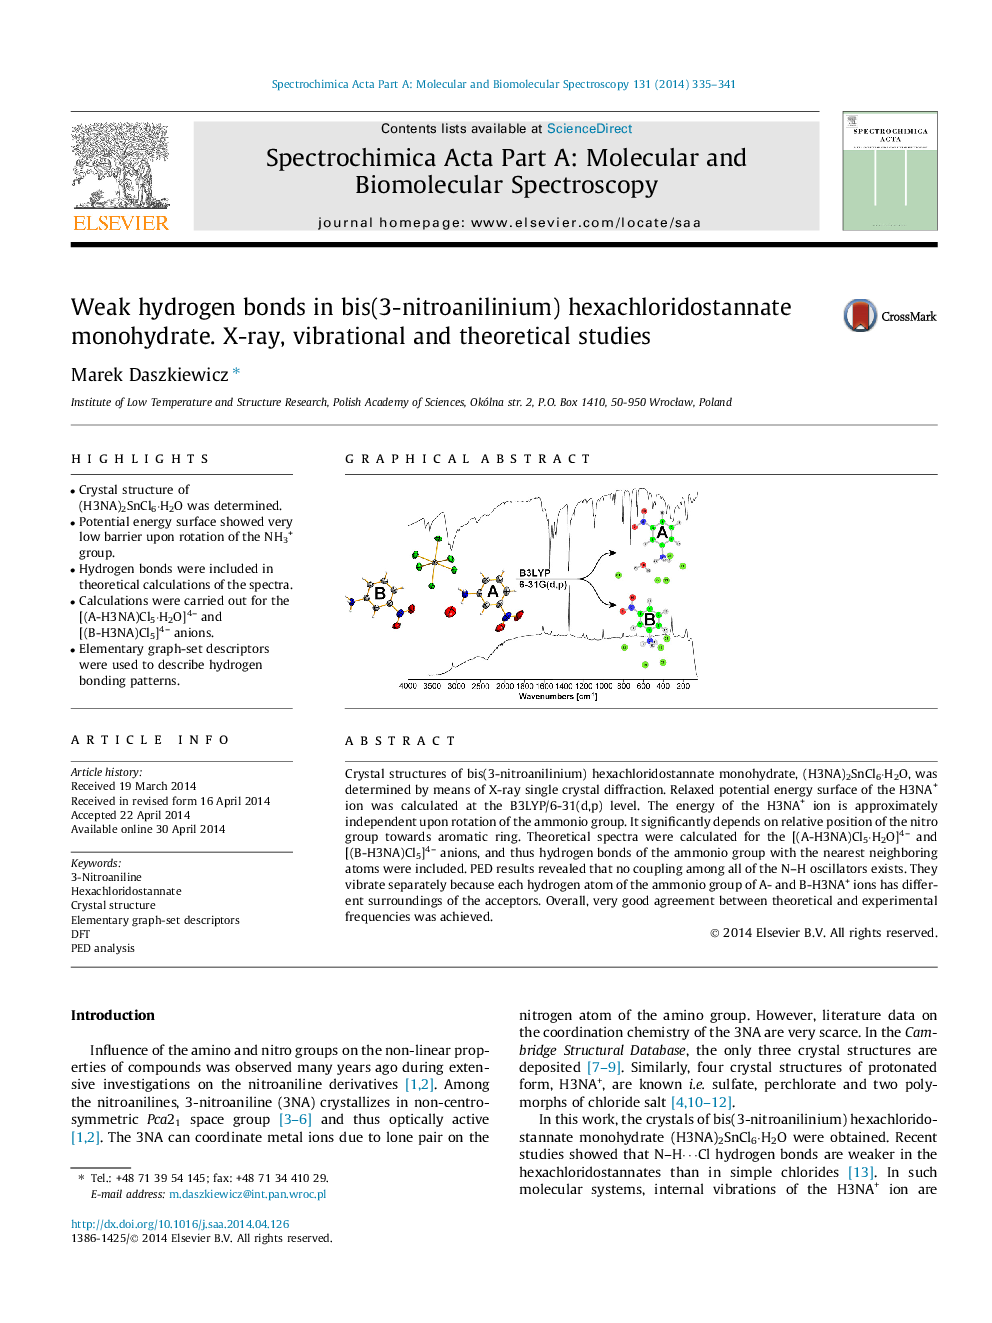 Weak hydrogen bonds in bis(3-nitroanilinium) hexachloridostannate monohydrate. X-ray, vibrational and theoretical studies